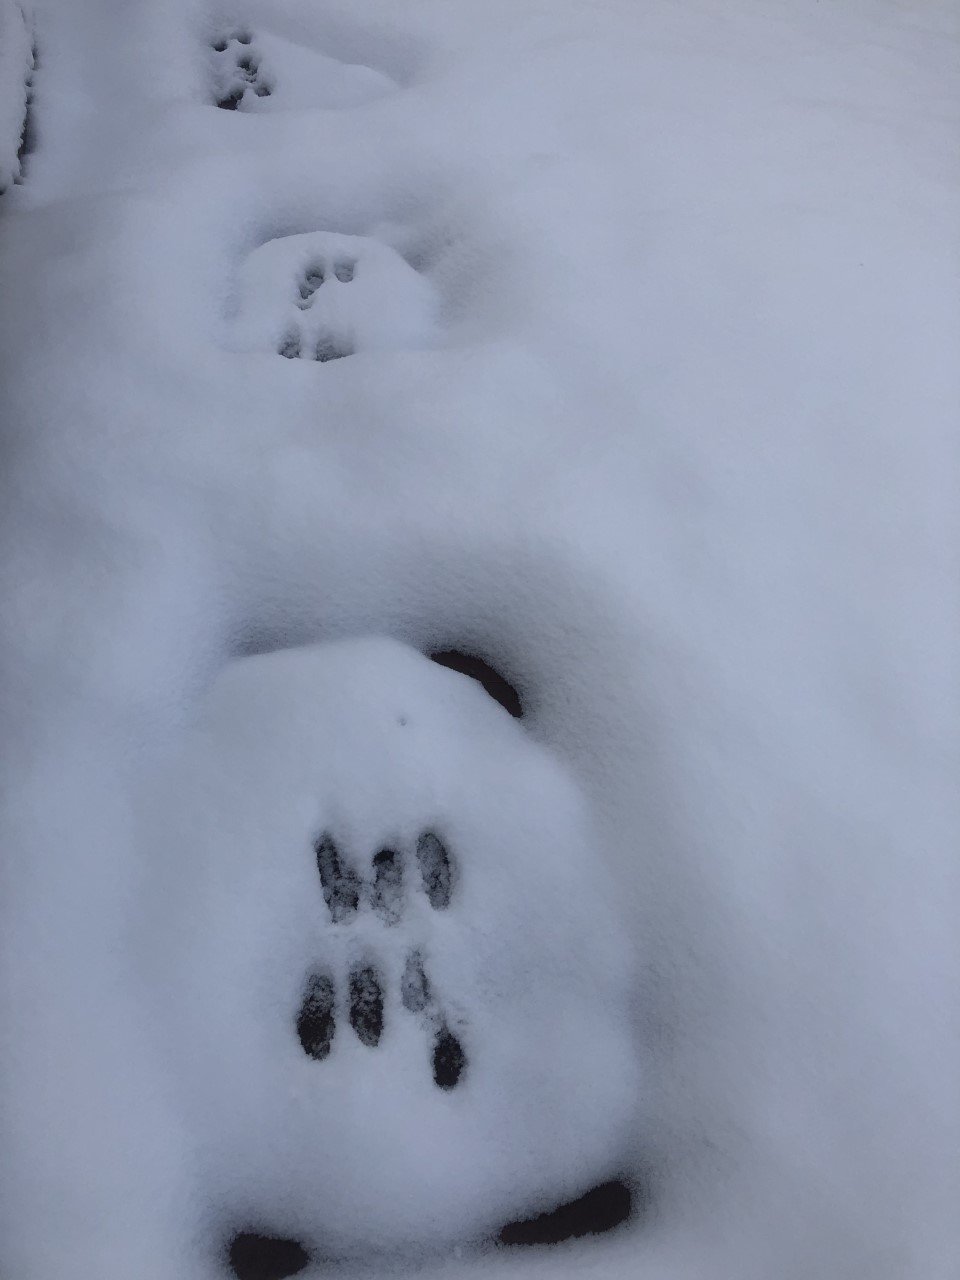 Bunny snow tracks